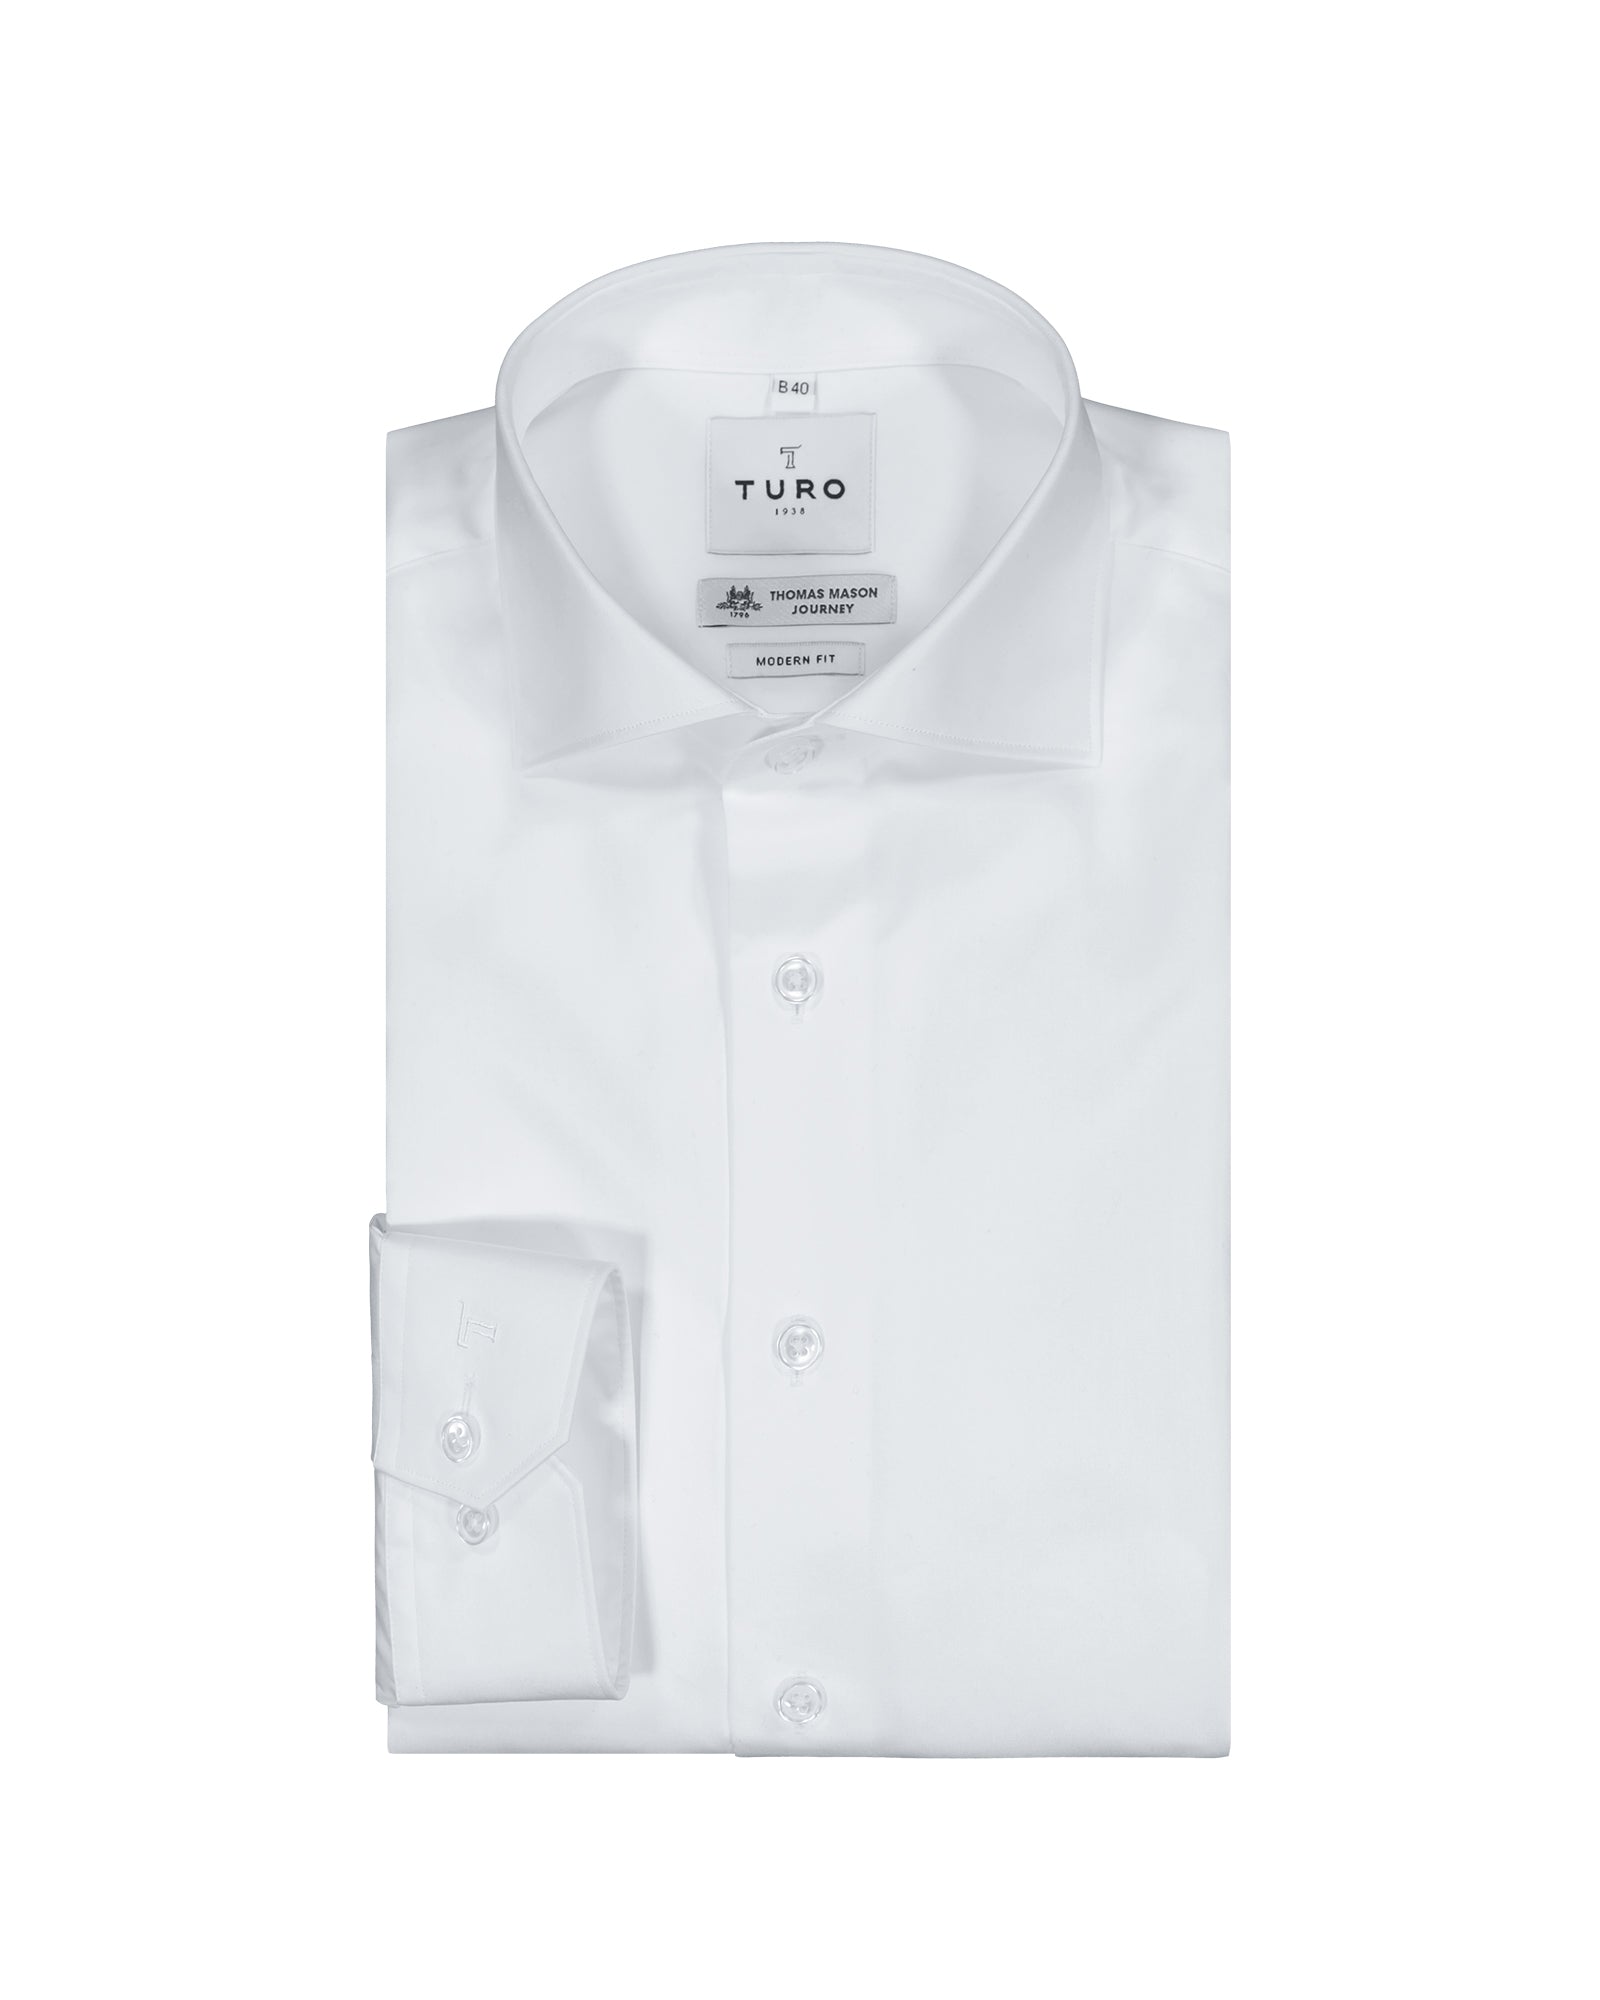 Turo - Modern fit shirt in Thomas Mason journey